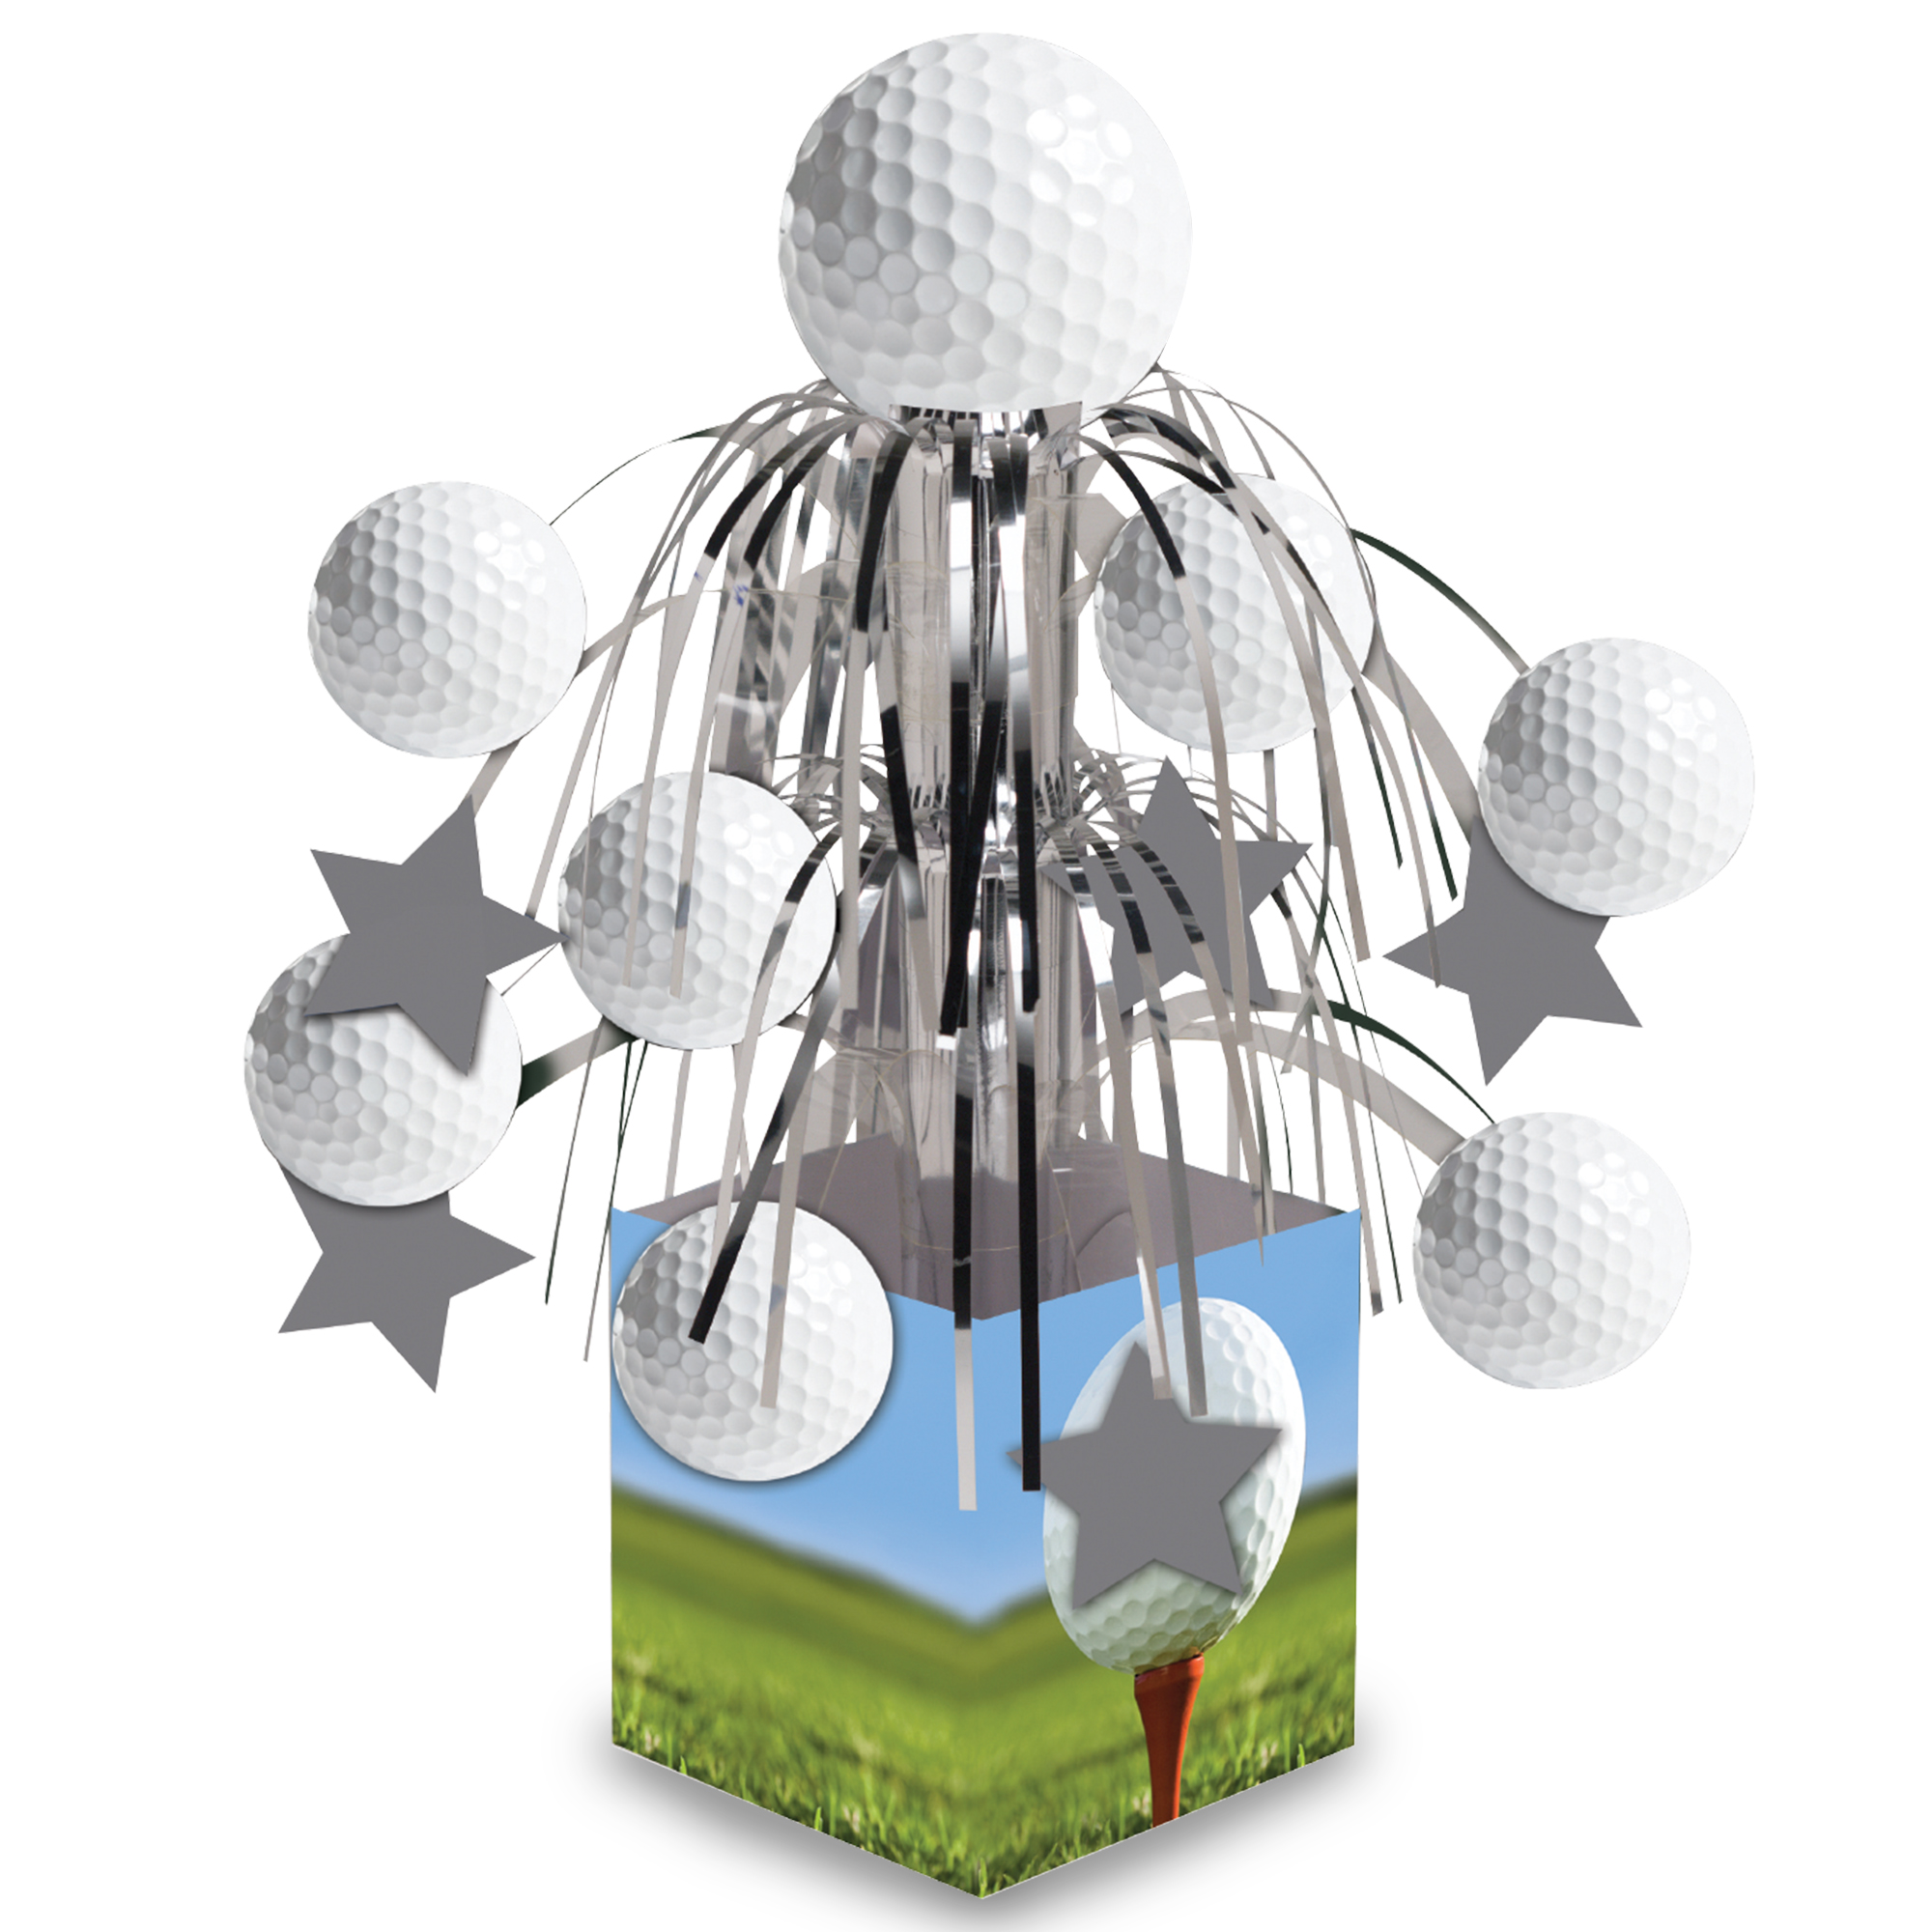 Golf Ball 12 1/2" Centerpiece by Windy City Novelties